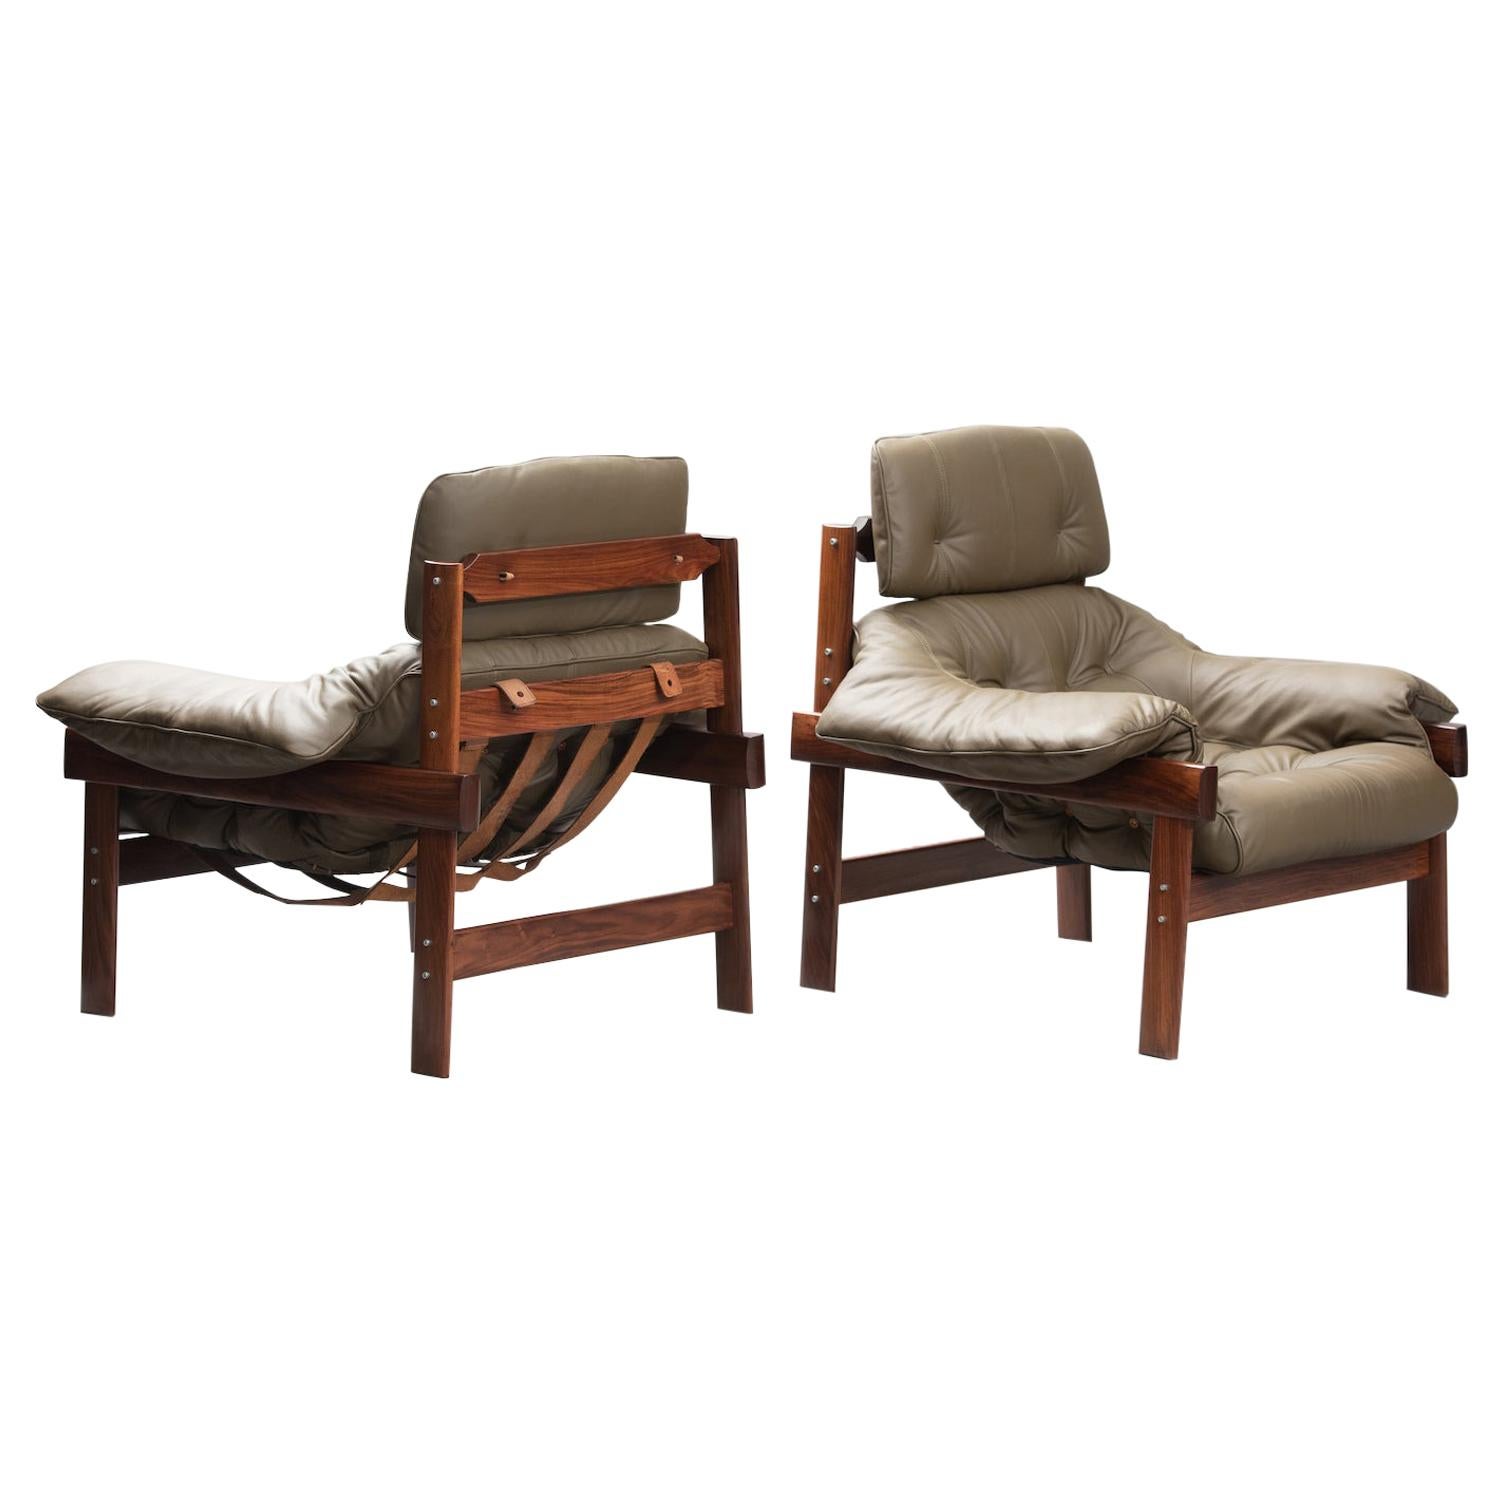 Percival Lafer Mid-Century Modern Hardwood Lounge Chairs for Lafer, Brazil 1960s